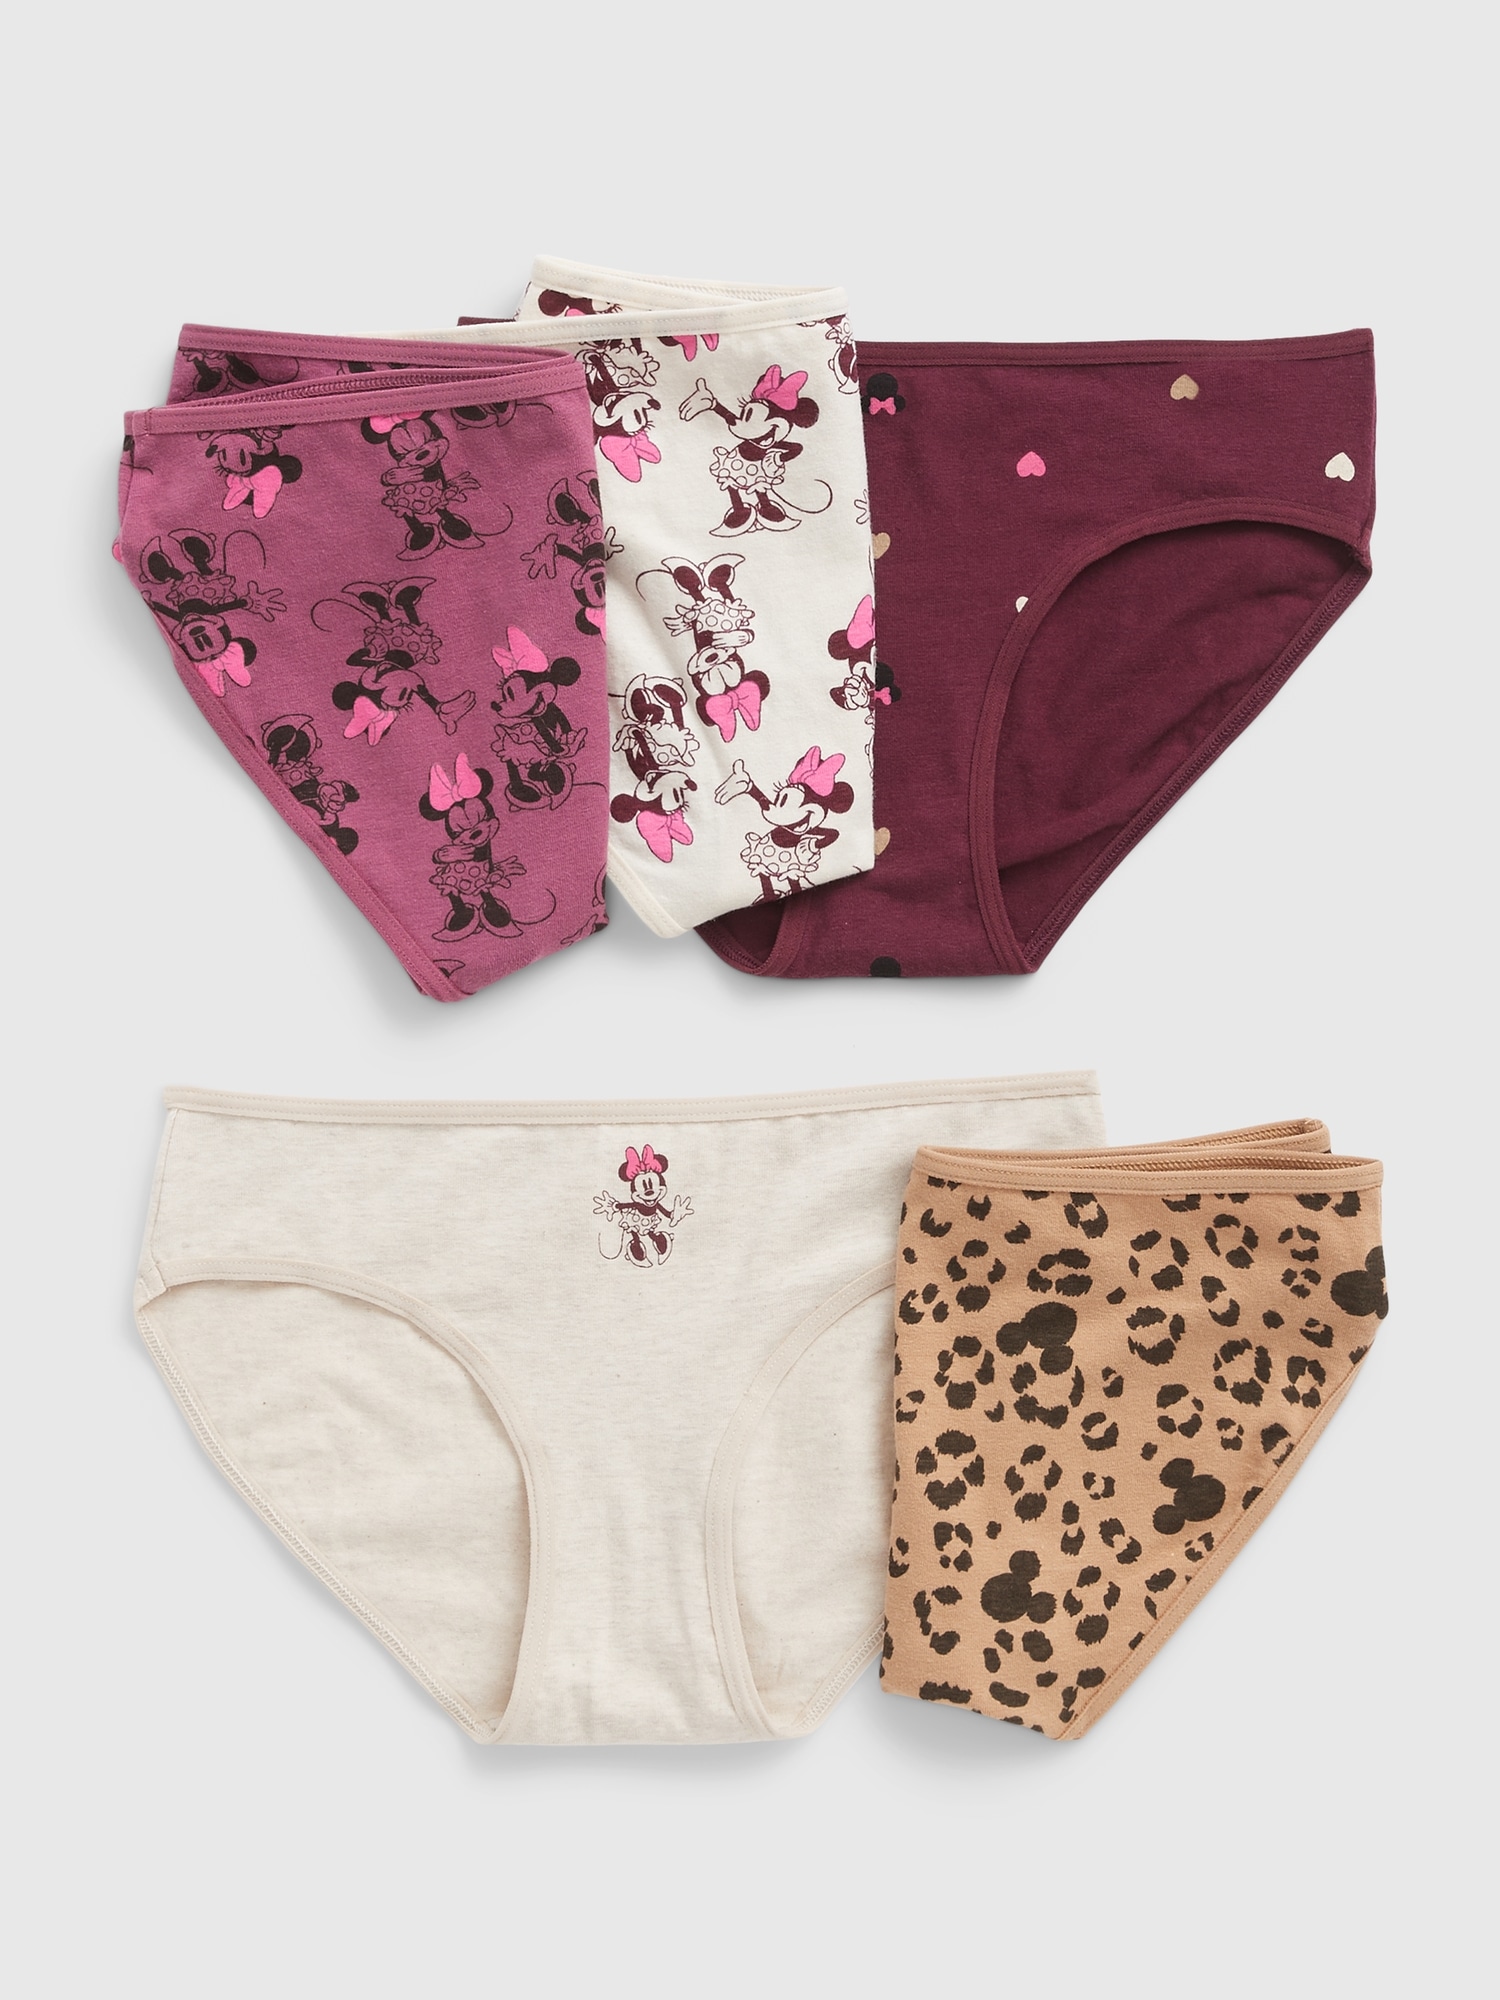 Disney Spandex Panties for Women